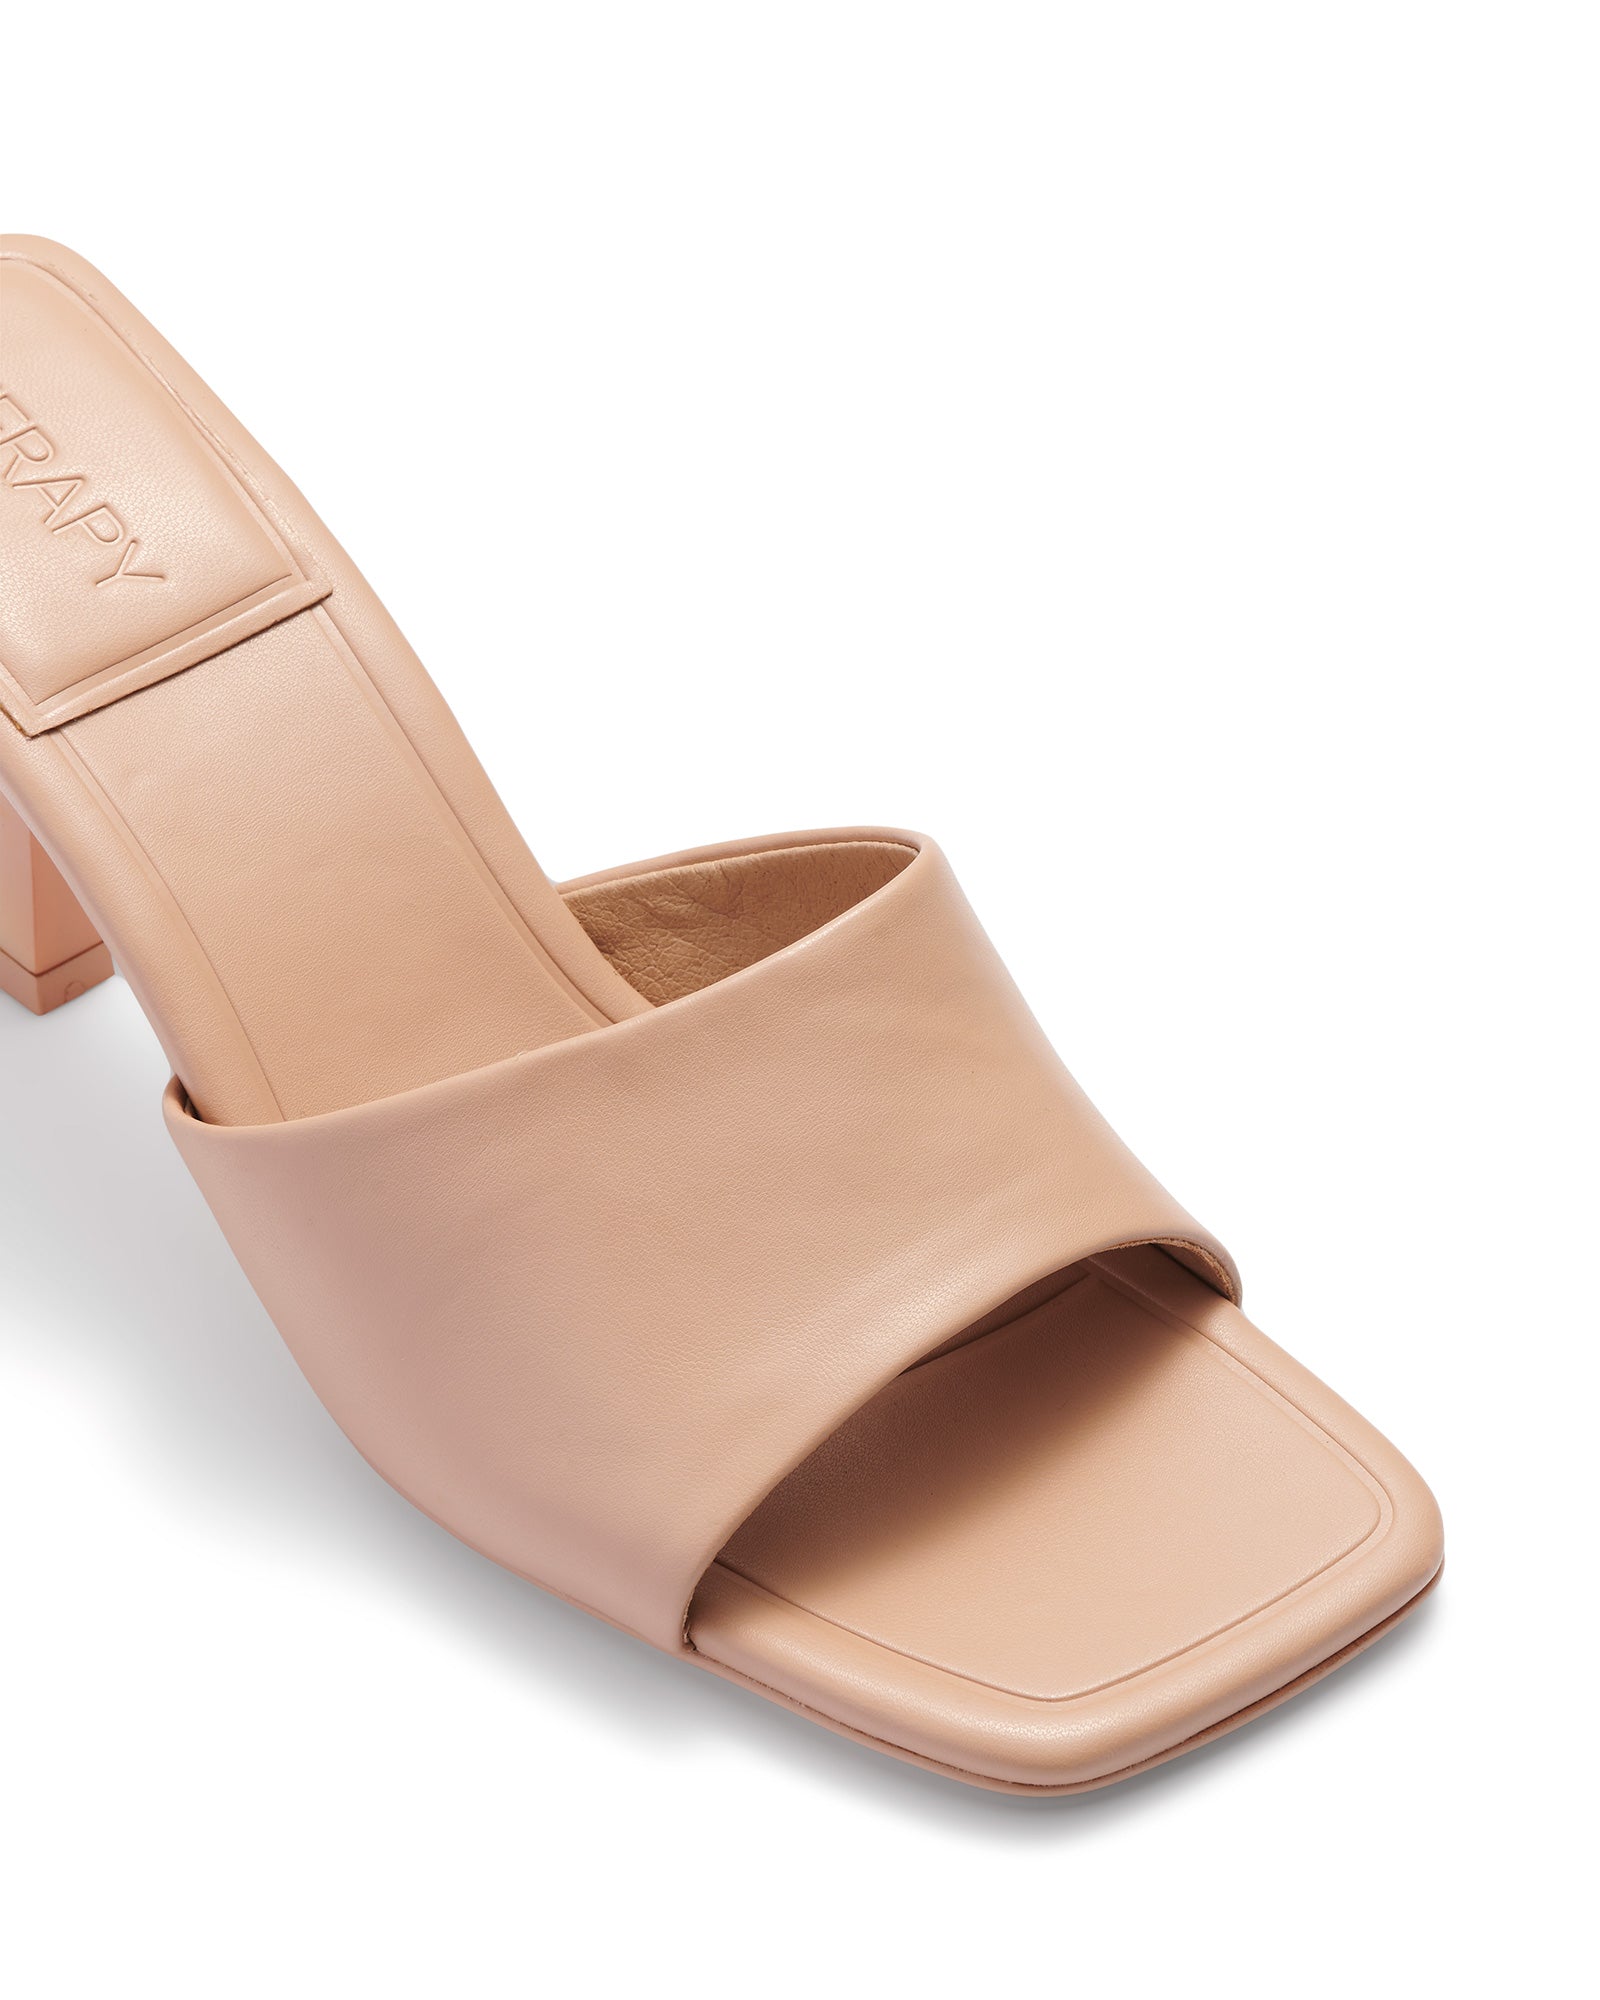 Therapy Shoes Dionne Latte | Women's Heels | Sandals | Stiletto | Mule